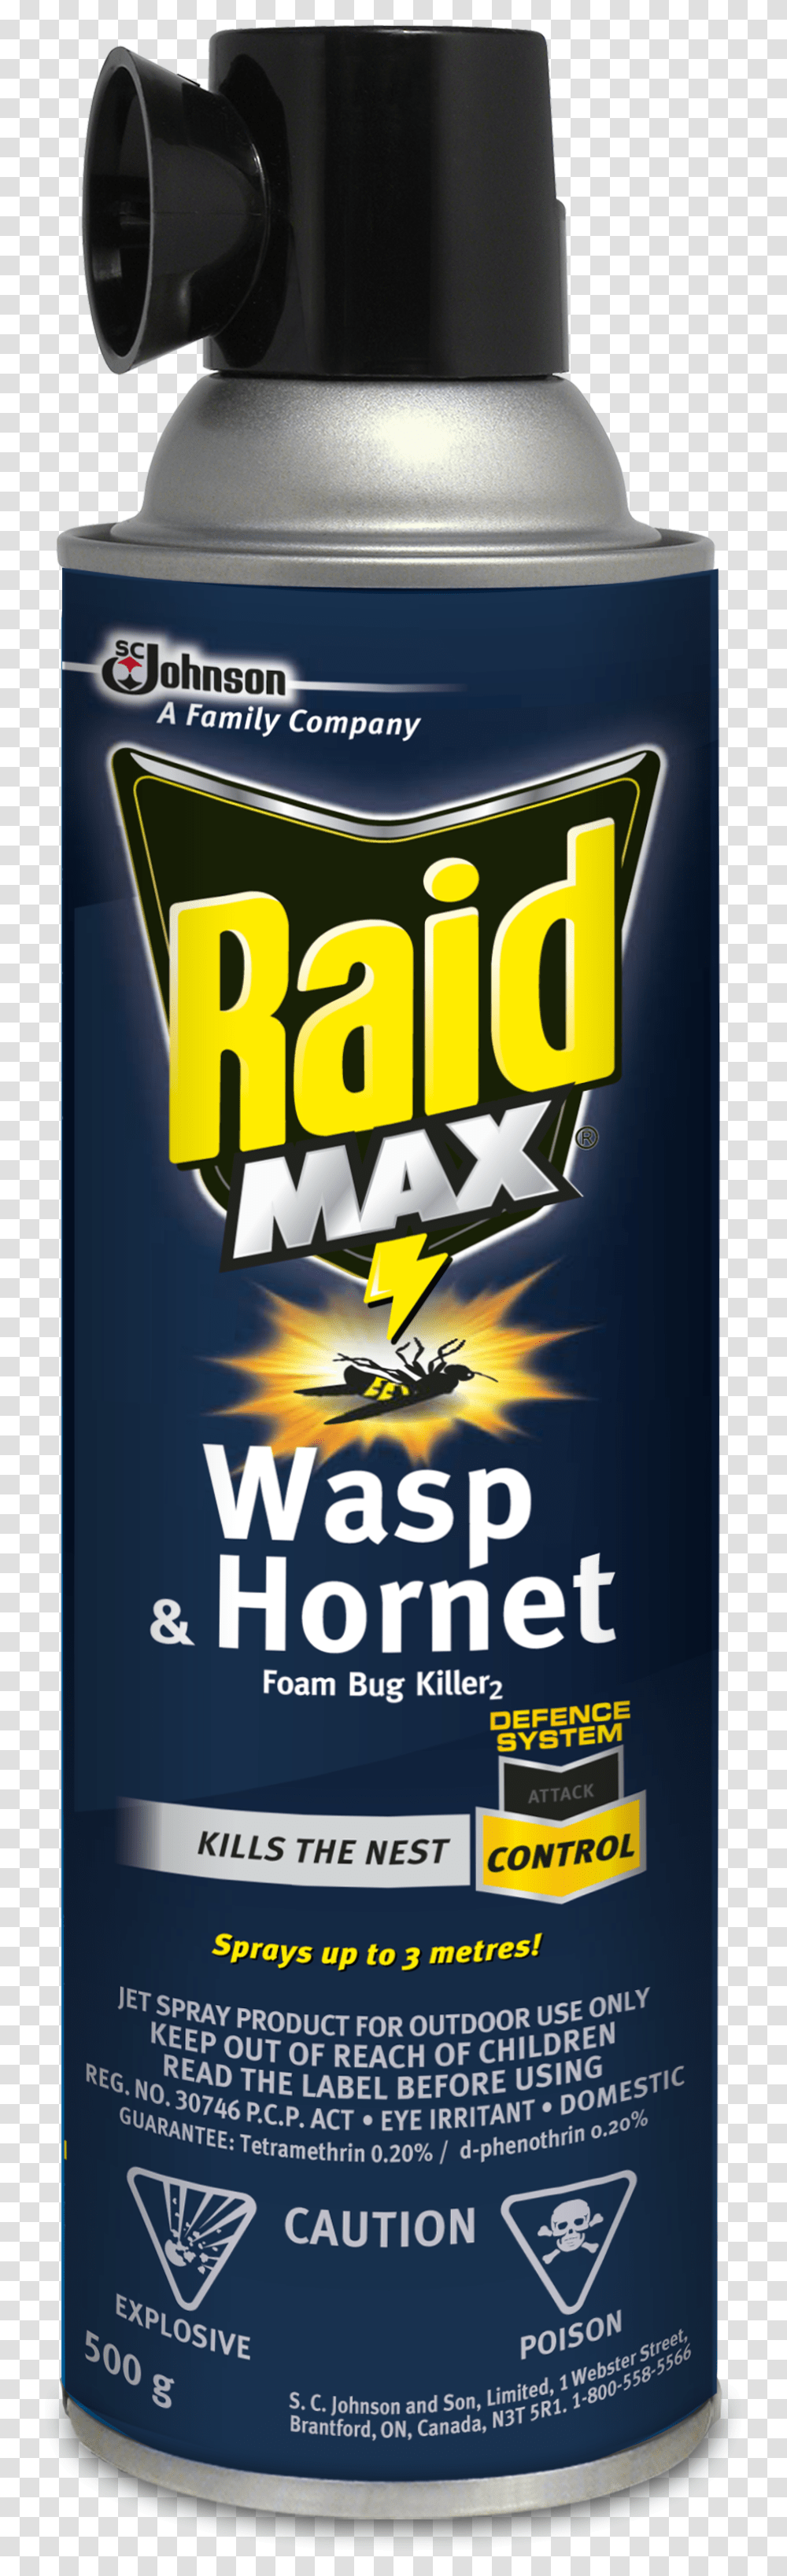 Raid Max Wasp Amp Hornet Foam Bug Killer Raid Max Wasp And Hornet, Poster, Advertisement, Flyer, Paper Transparent Png